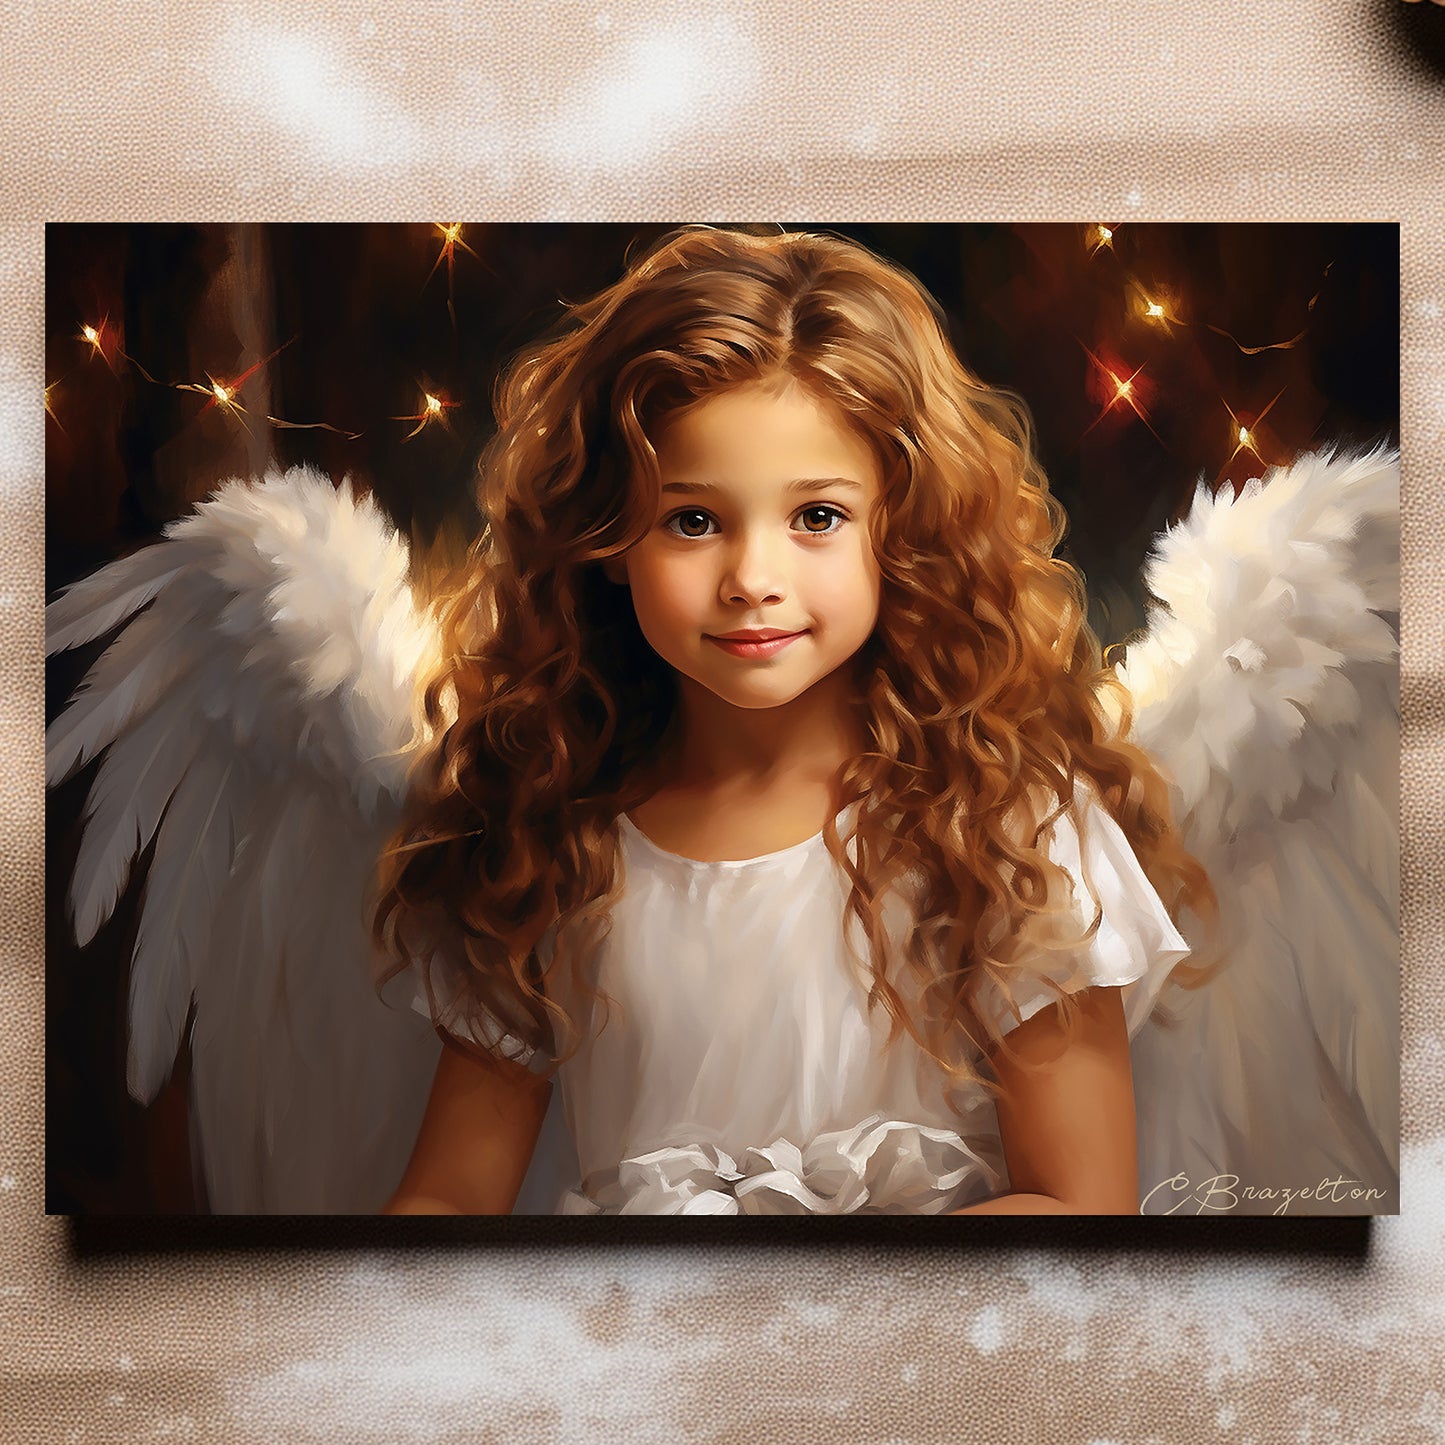 Angels, Praise the LORD (Digital Art Print Download)